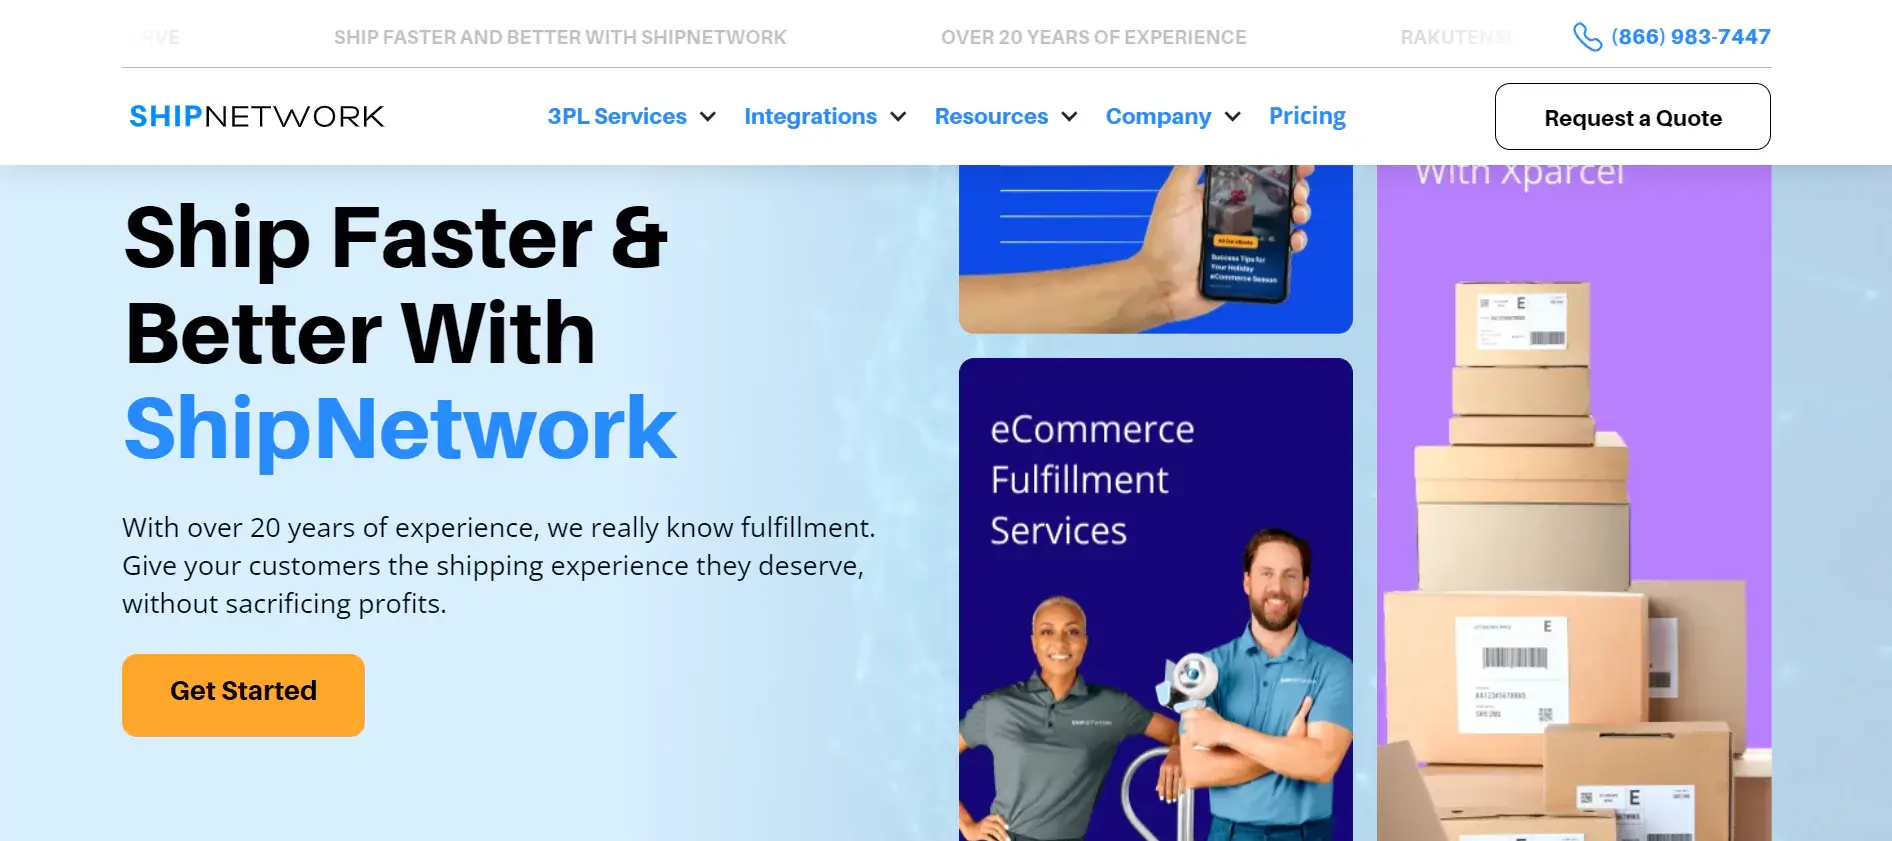 Best eCommerce fulfillment services - ShipNetwork